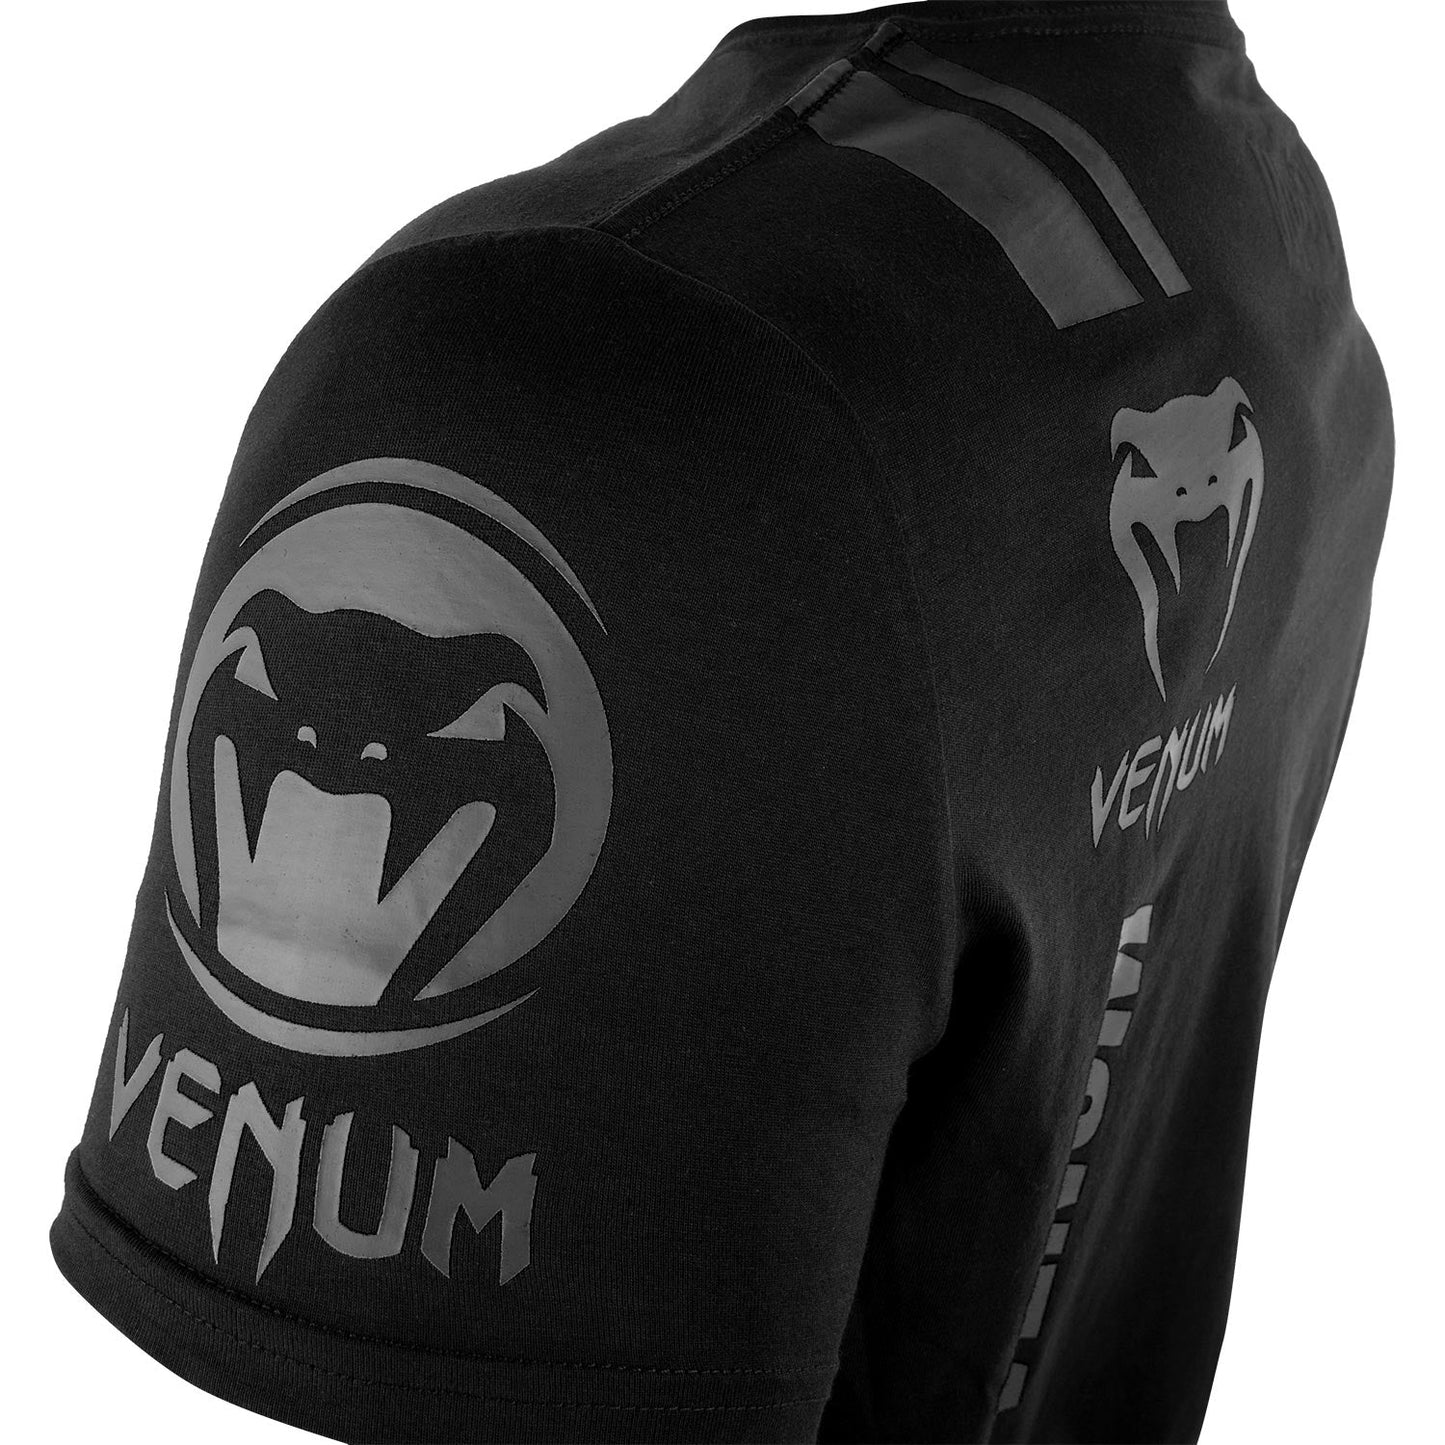 Venum Logos T-shirt - Black/Black